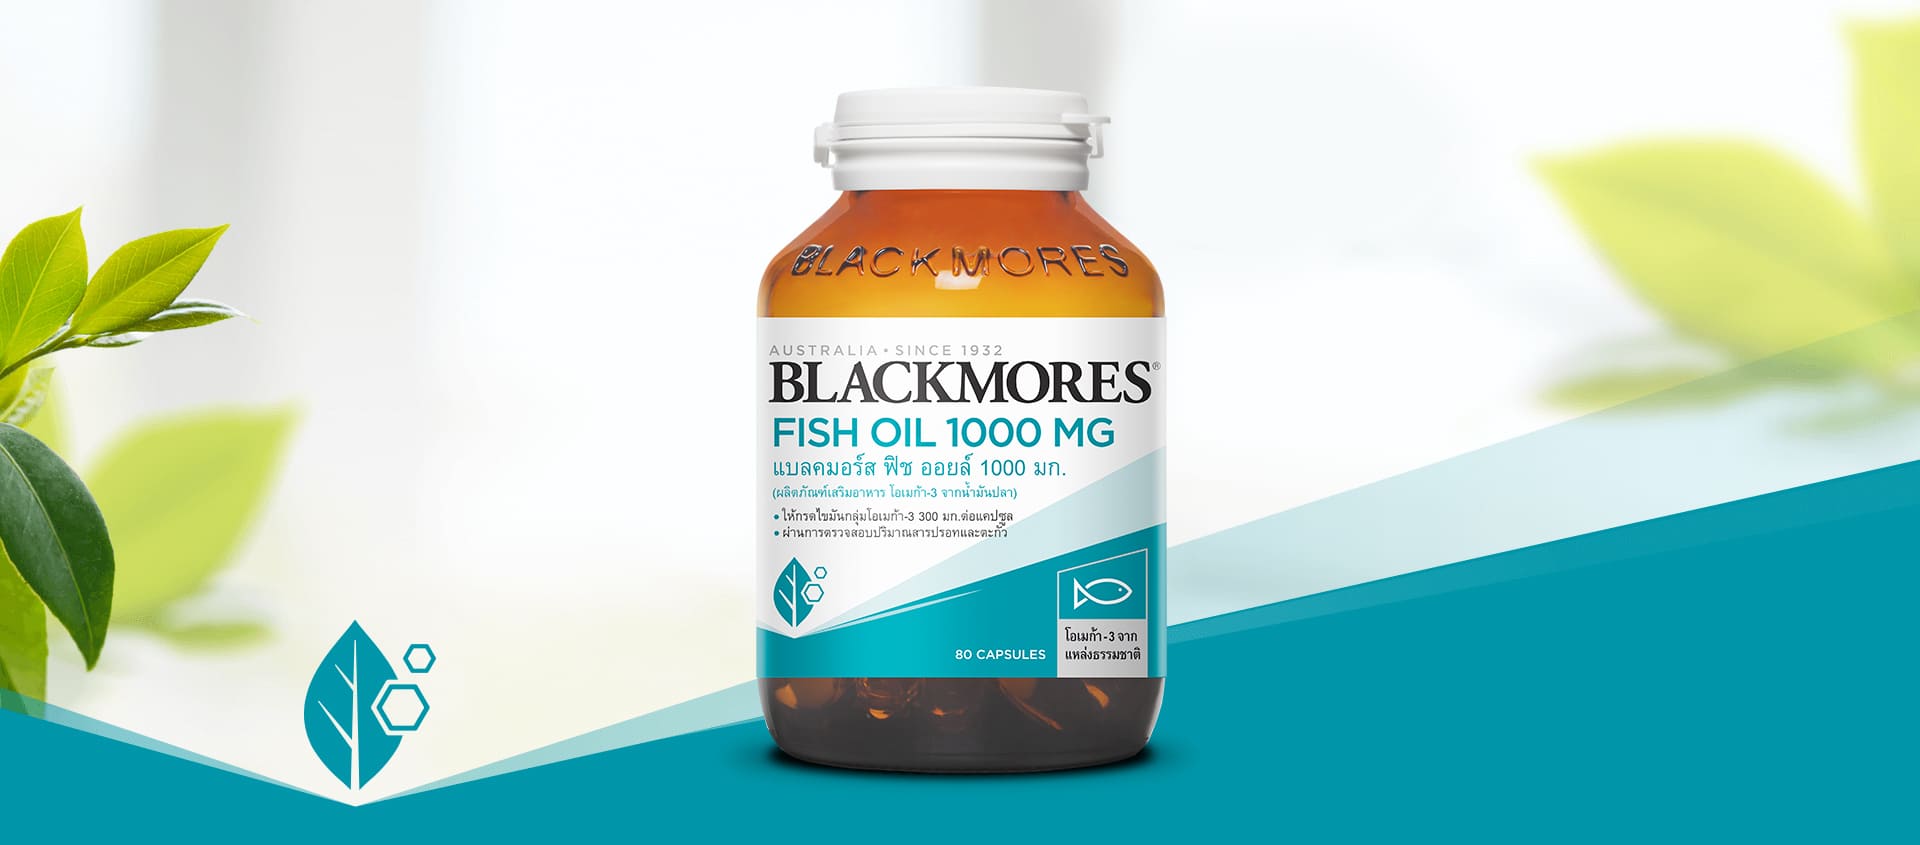 Blackmores Fish Oil 1000 mg